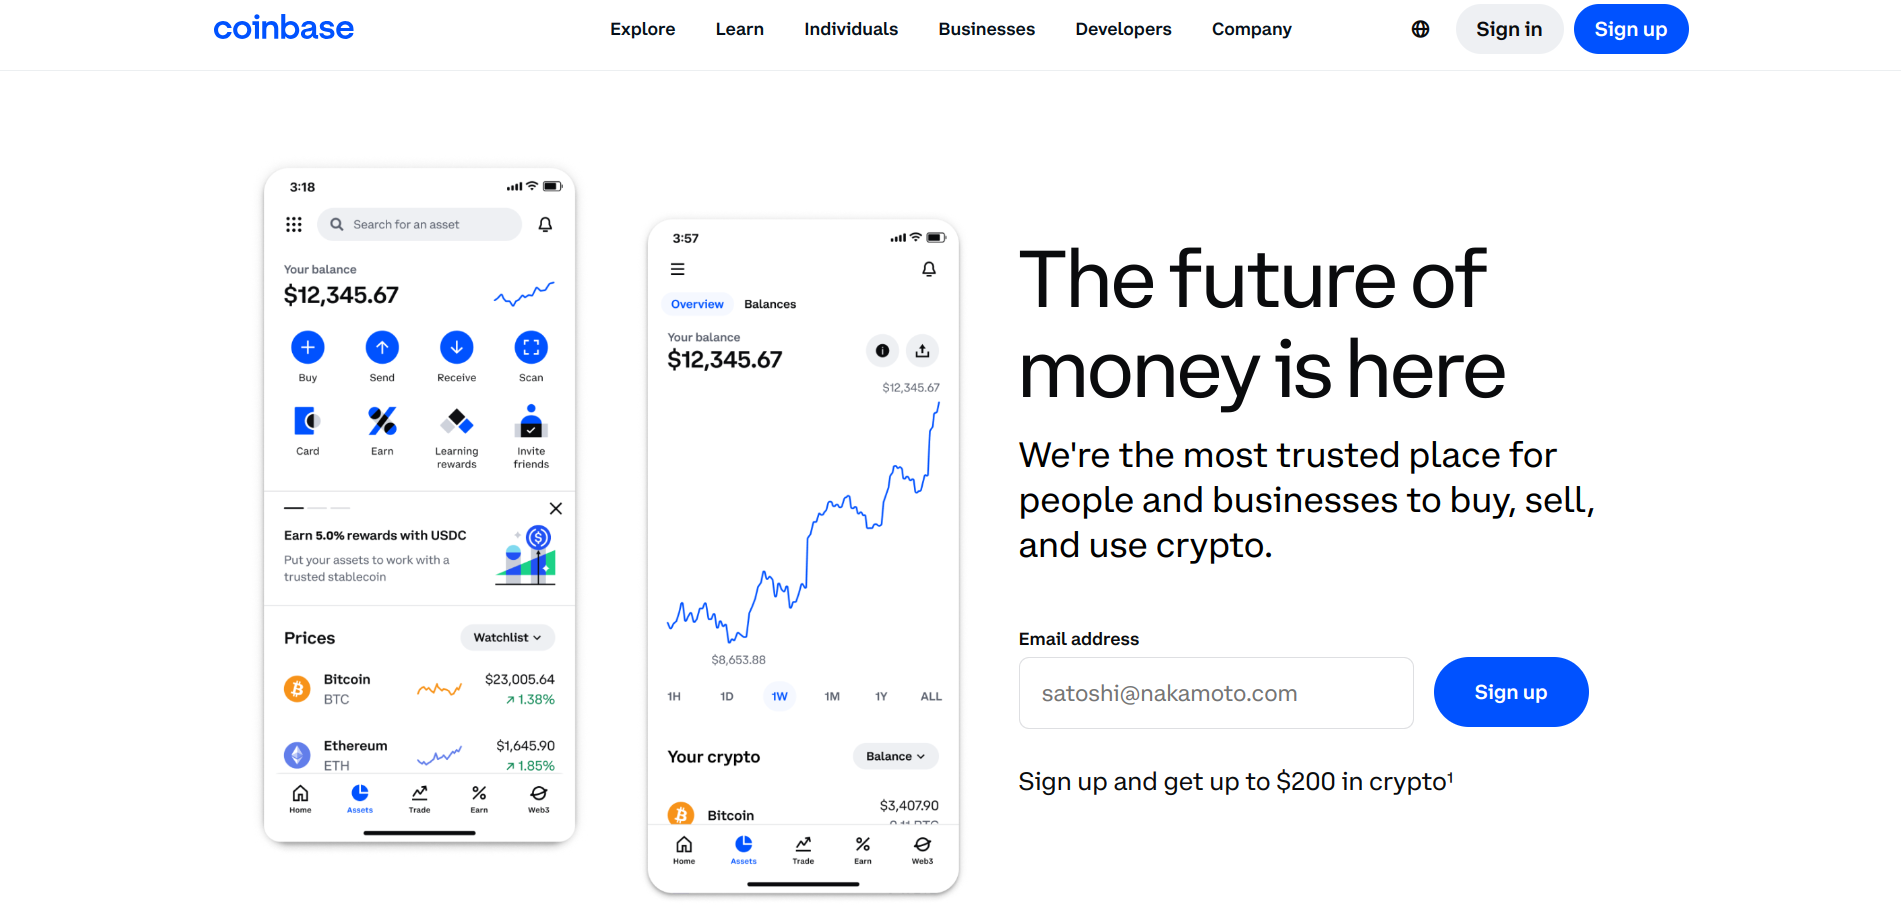 coinbase homepage